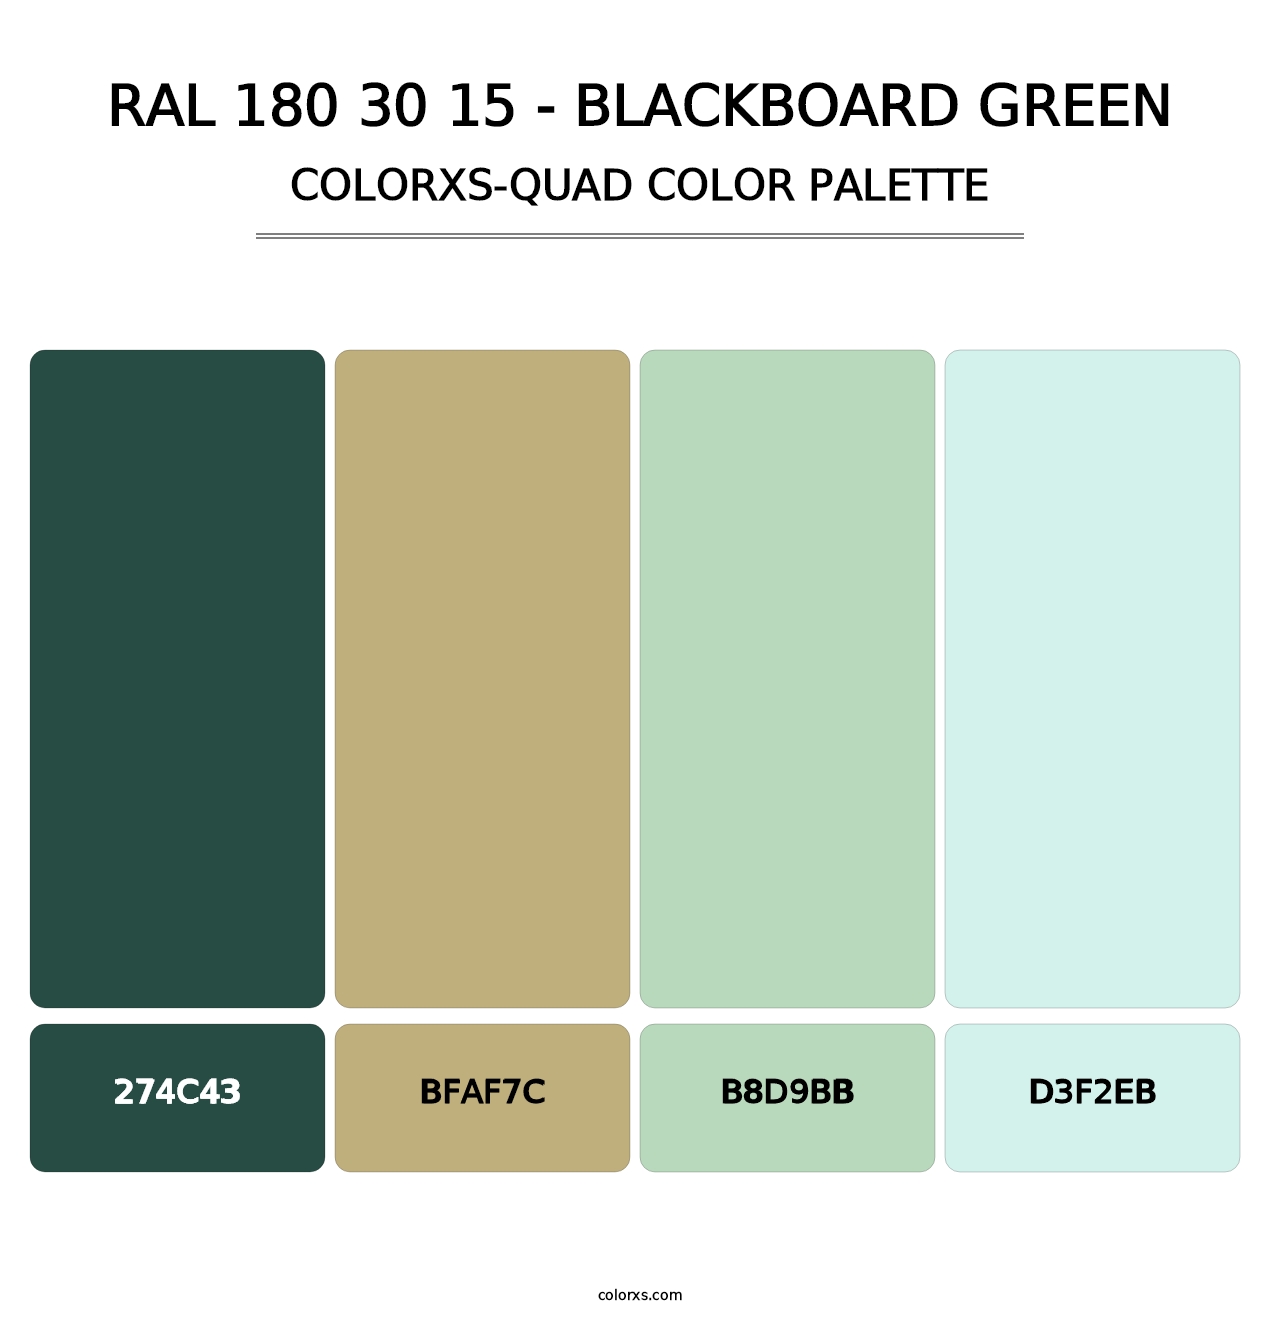 RAL 180 30 15 - Blackboard Green - Colorxs Quad Palette